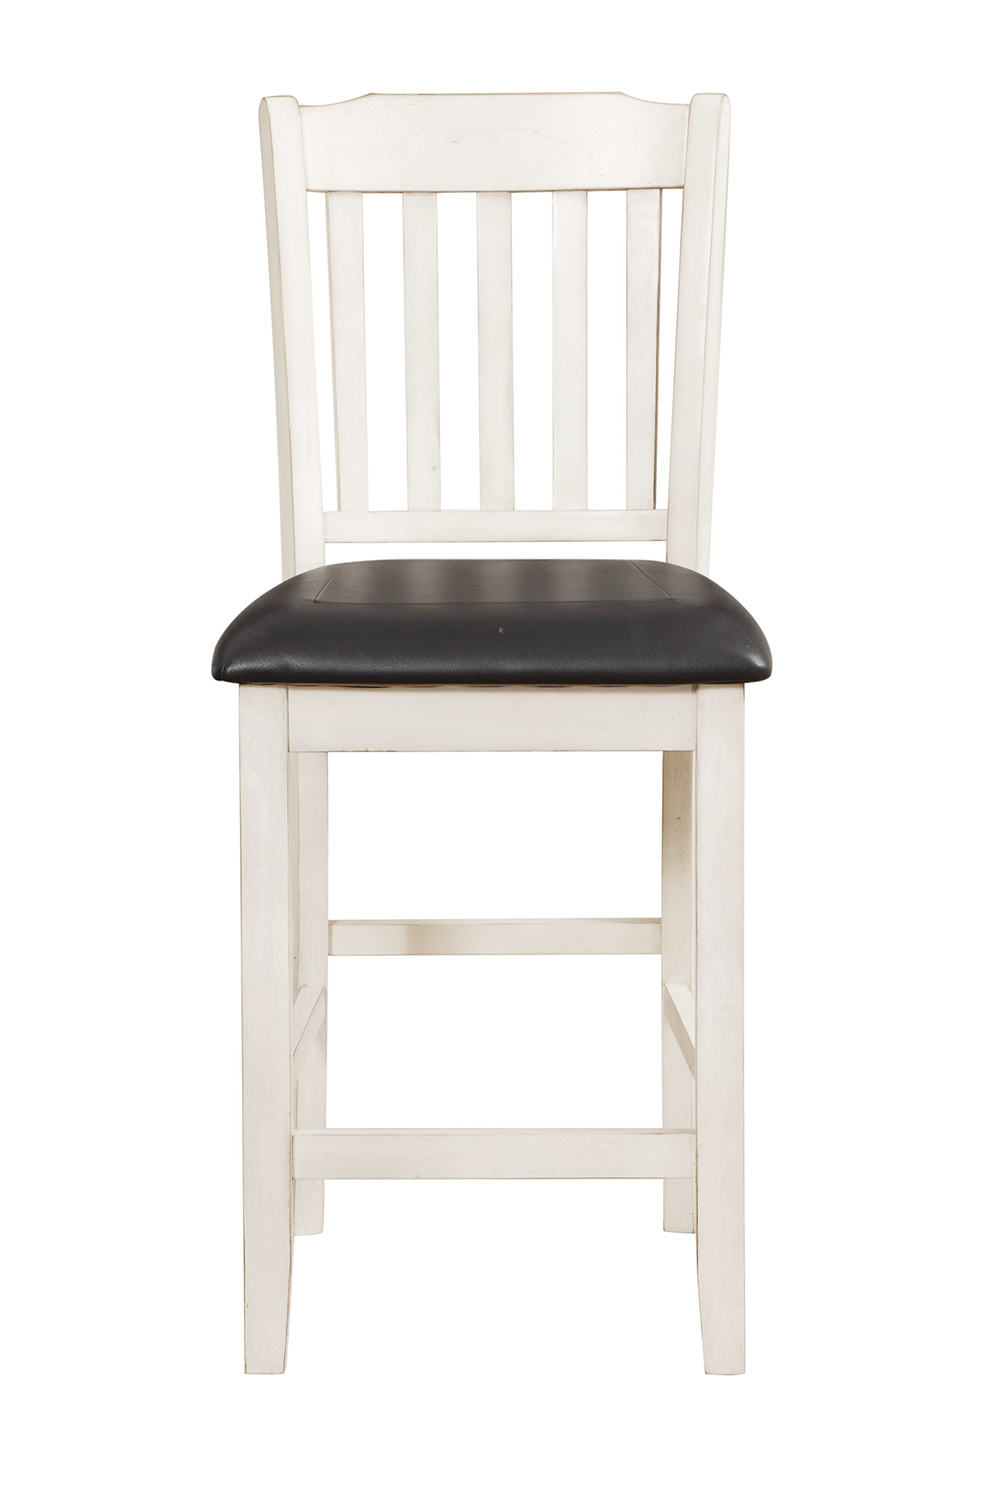 Homelegance Kiwi Counter Height Chair - White Wash